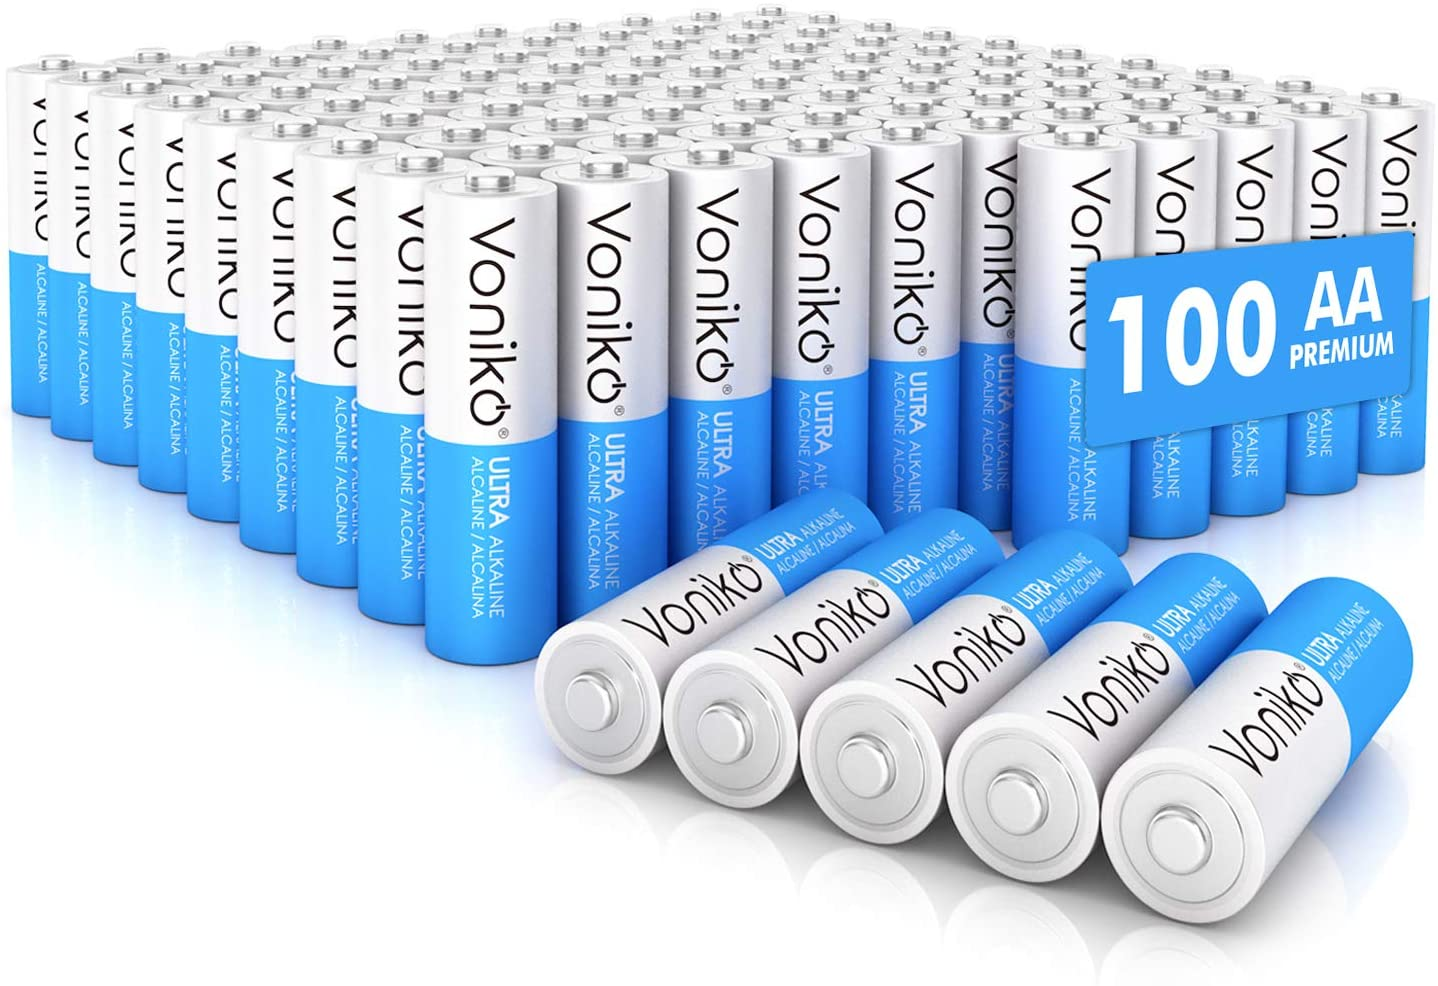 Premium Grade AA Batteries -100 Pack- Alkaline Double a Battery - Ultra Long-Lasting, Leakproof 1.5V Batteries - 10-Year Shelf Life